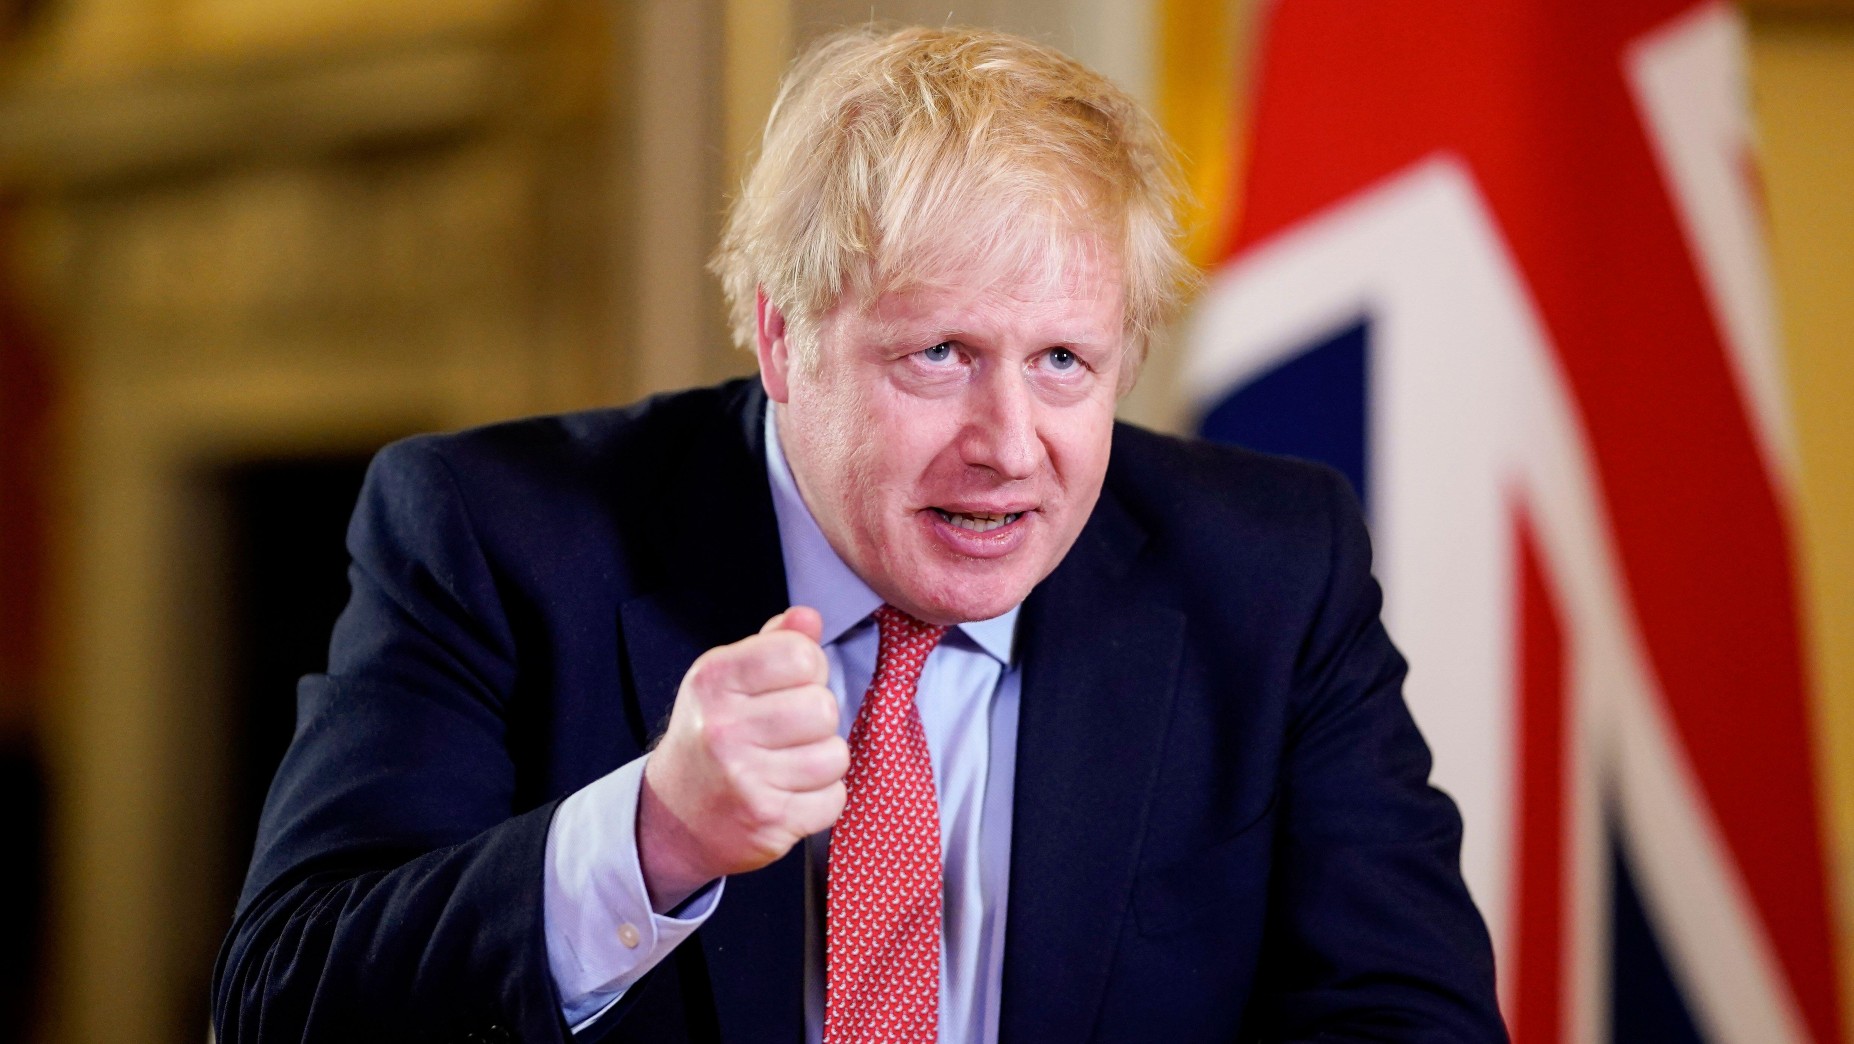 Boris Johnson addresses the nation on 23 March 2020 